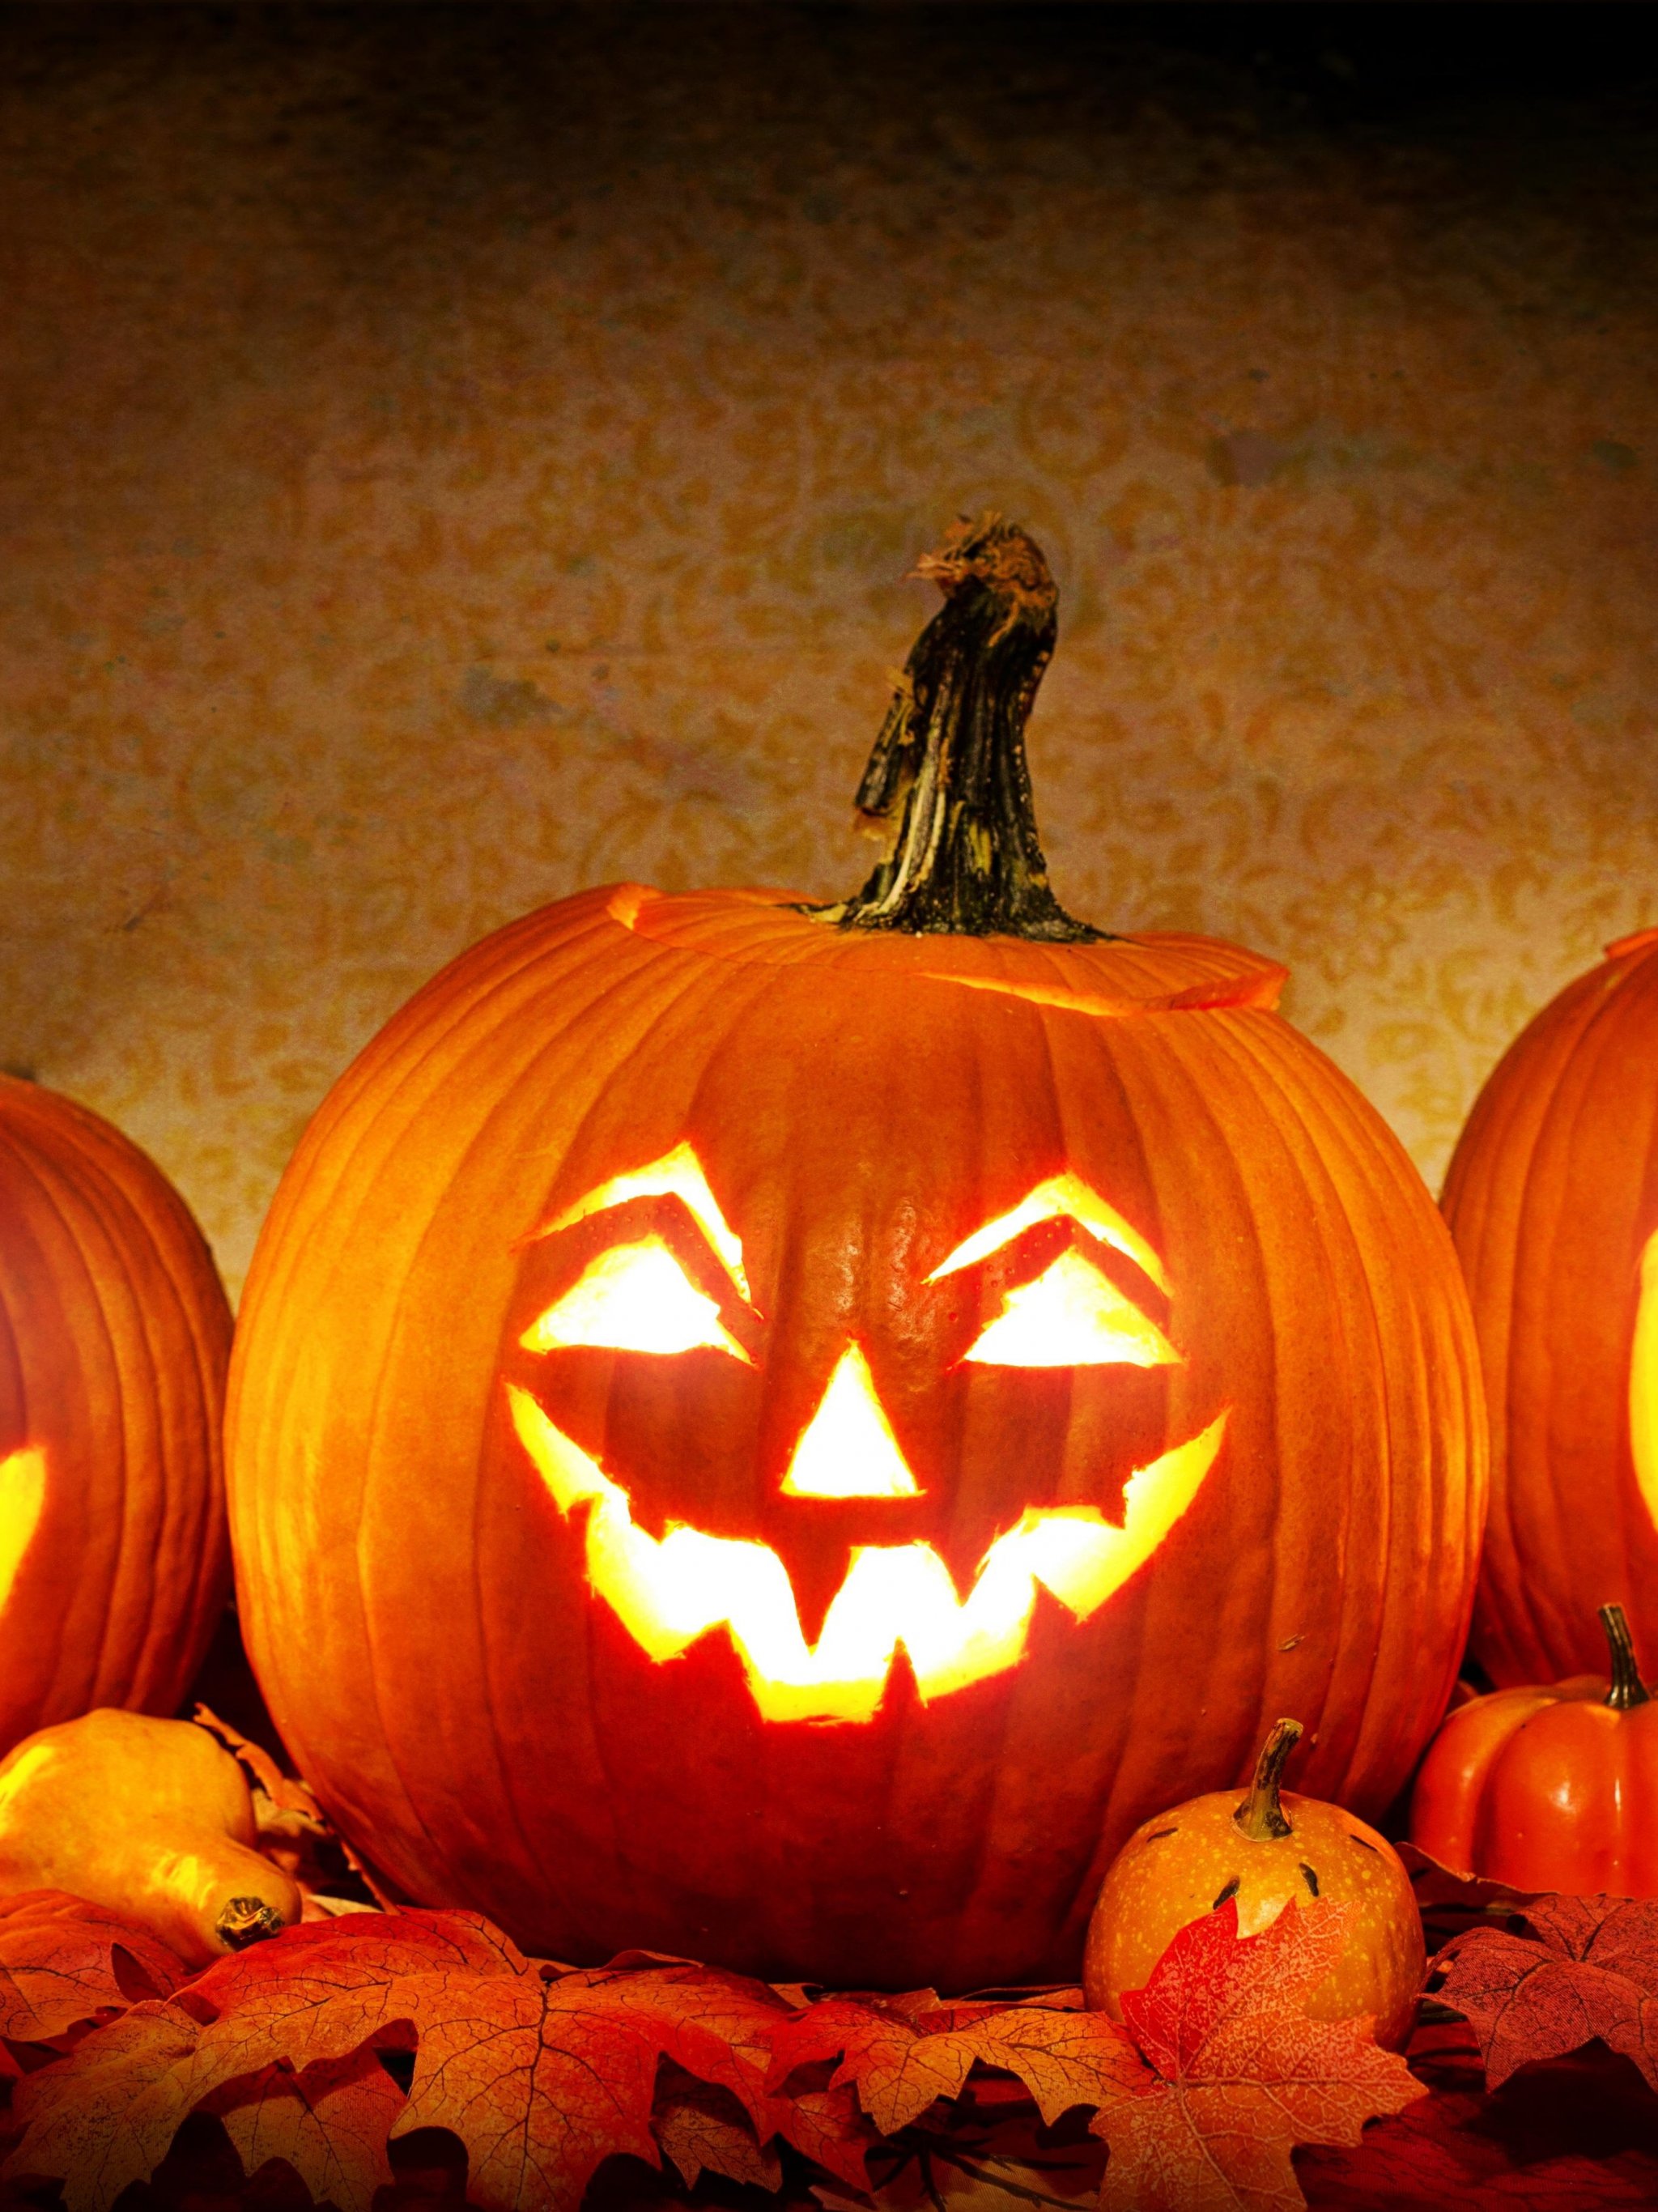 Jack o' Lantern Halloween Pumpkin Wallpaper - iPhone, Android & Desktop